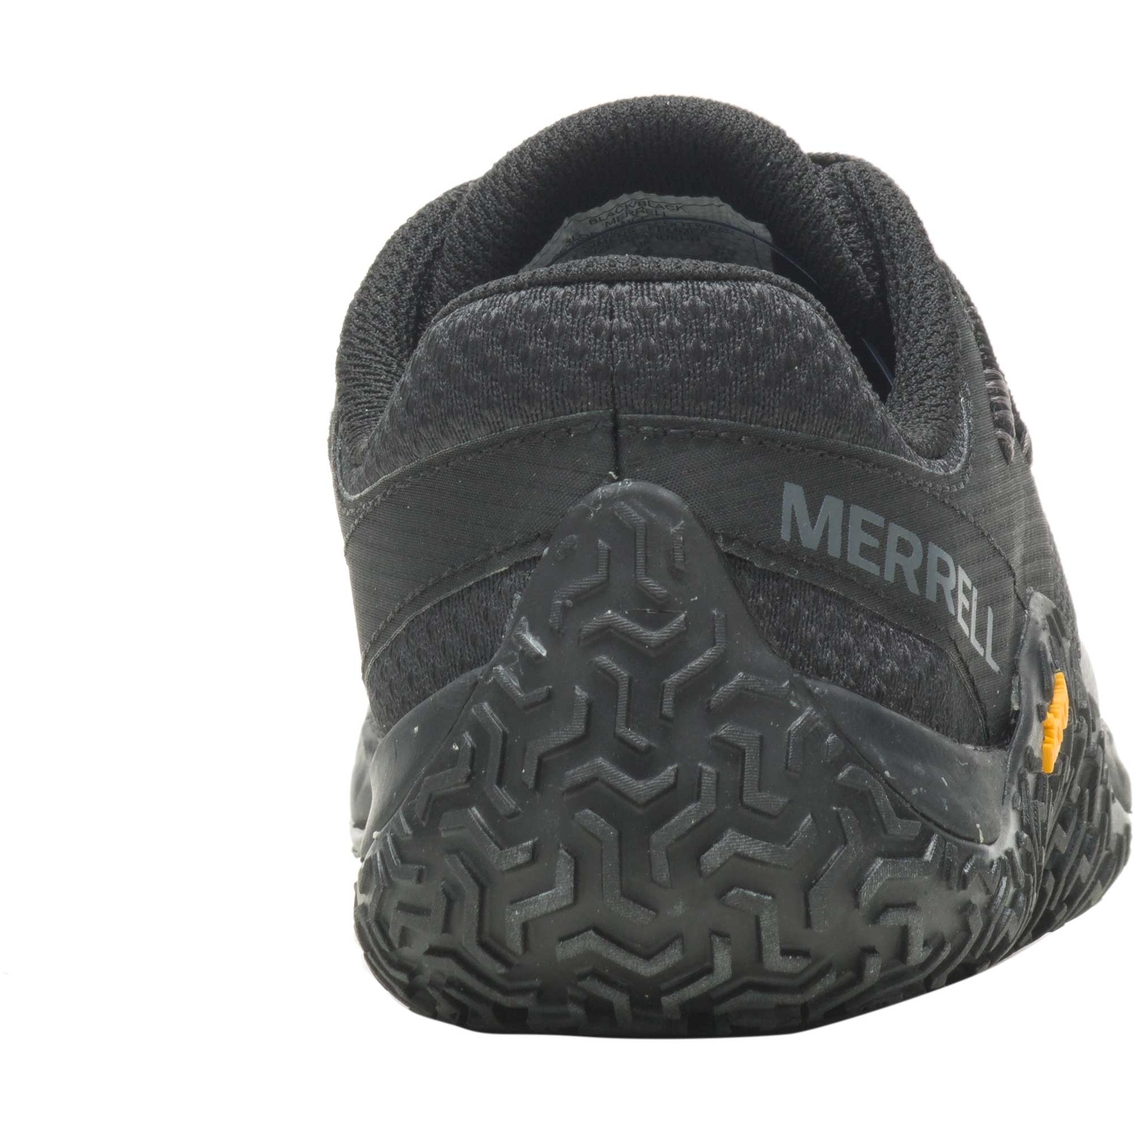 Merrell Women's Trail Glove 7 Running Shoes - Image 6 of 6